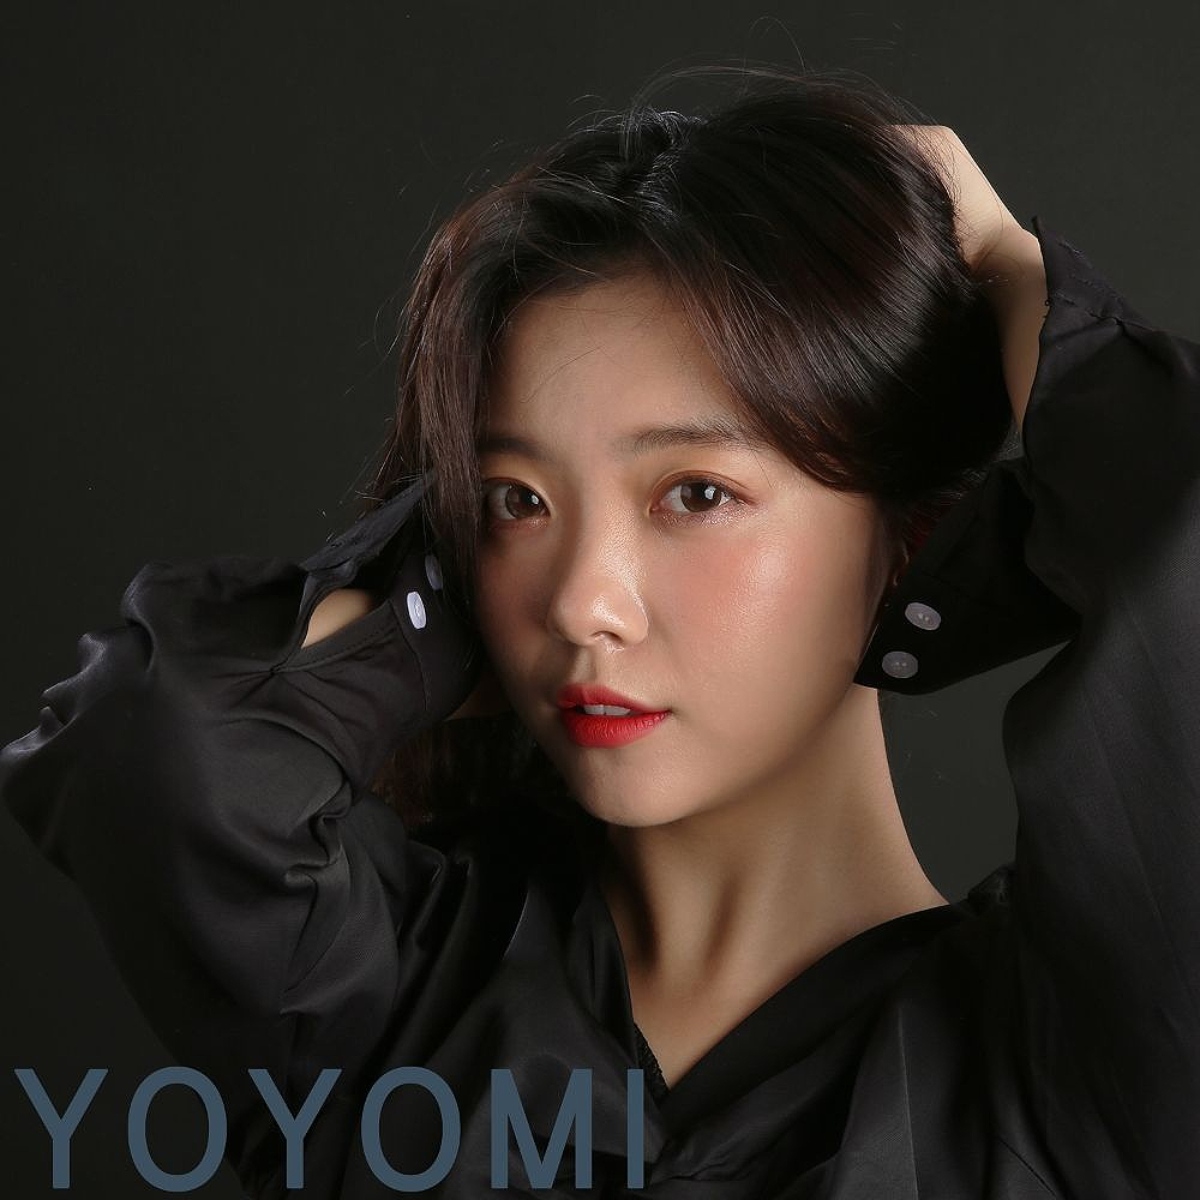 Singer Yoyomi